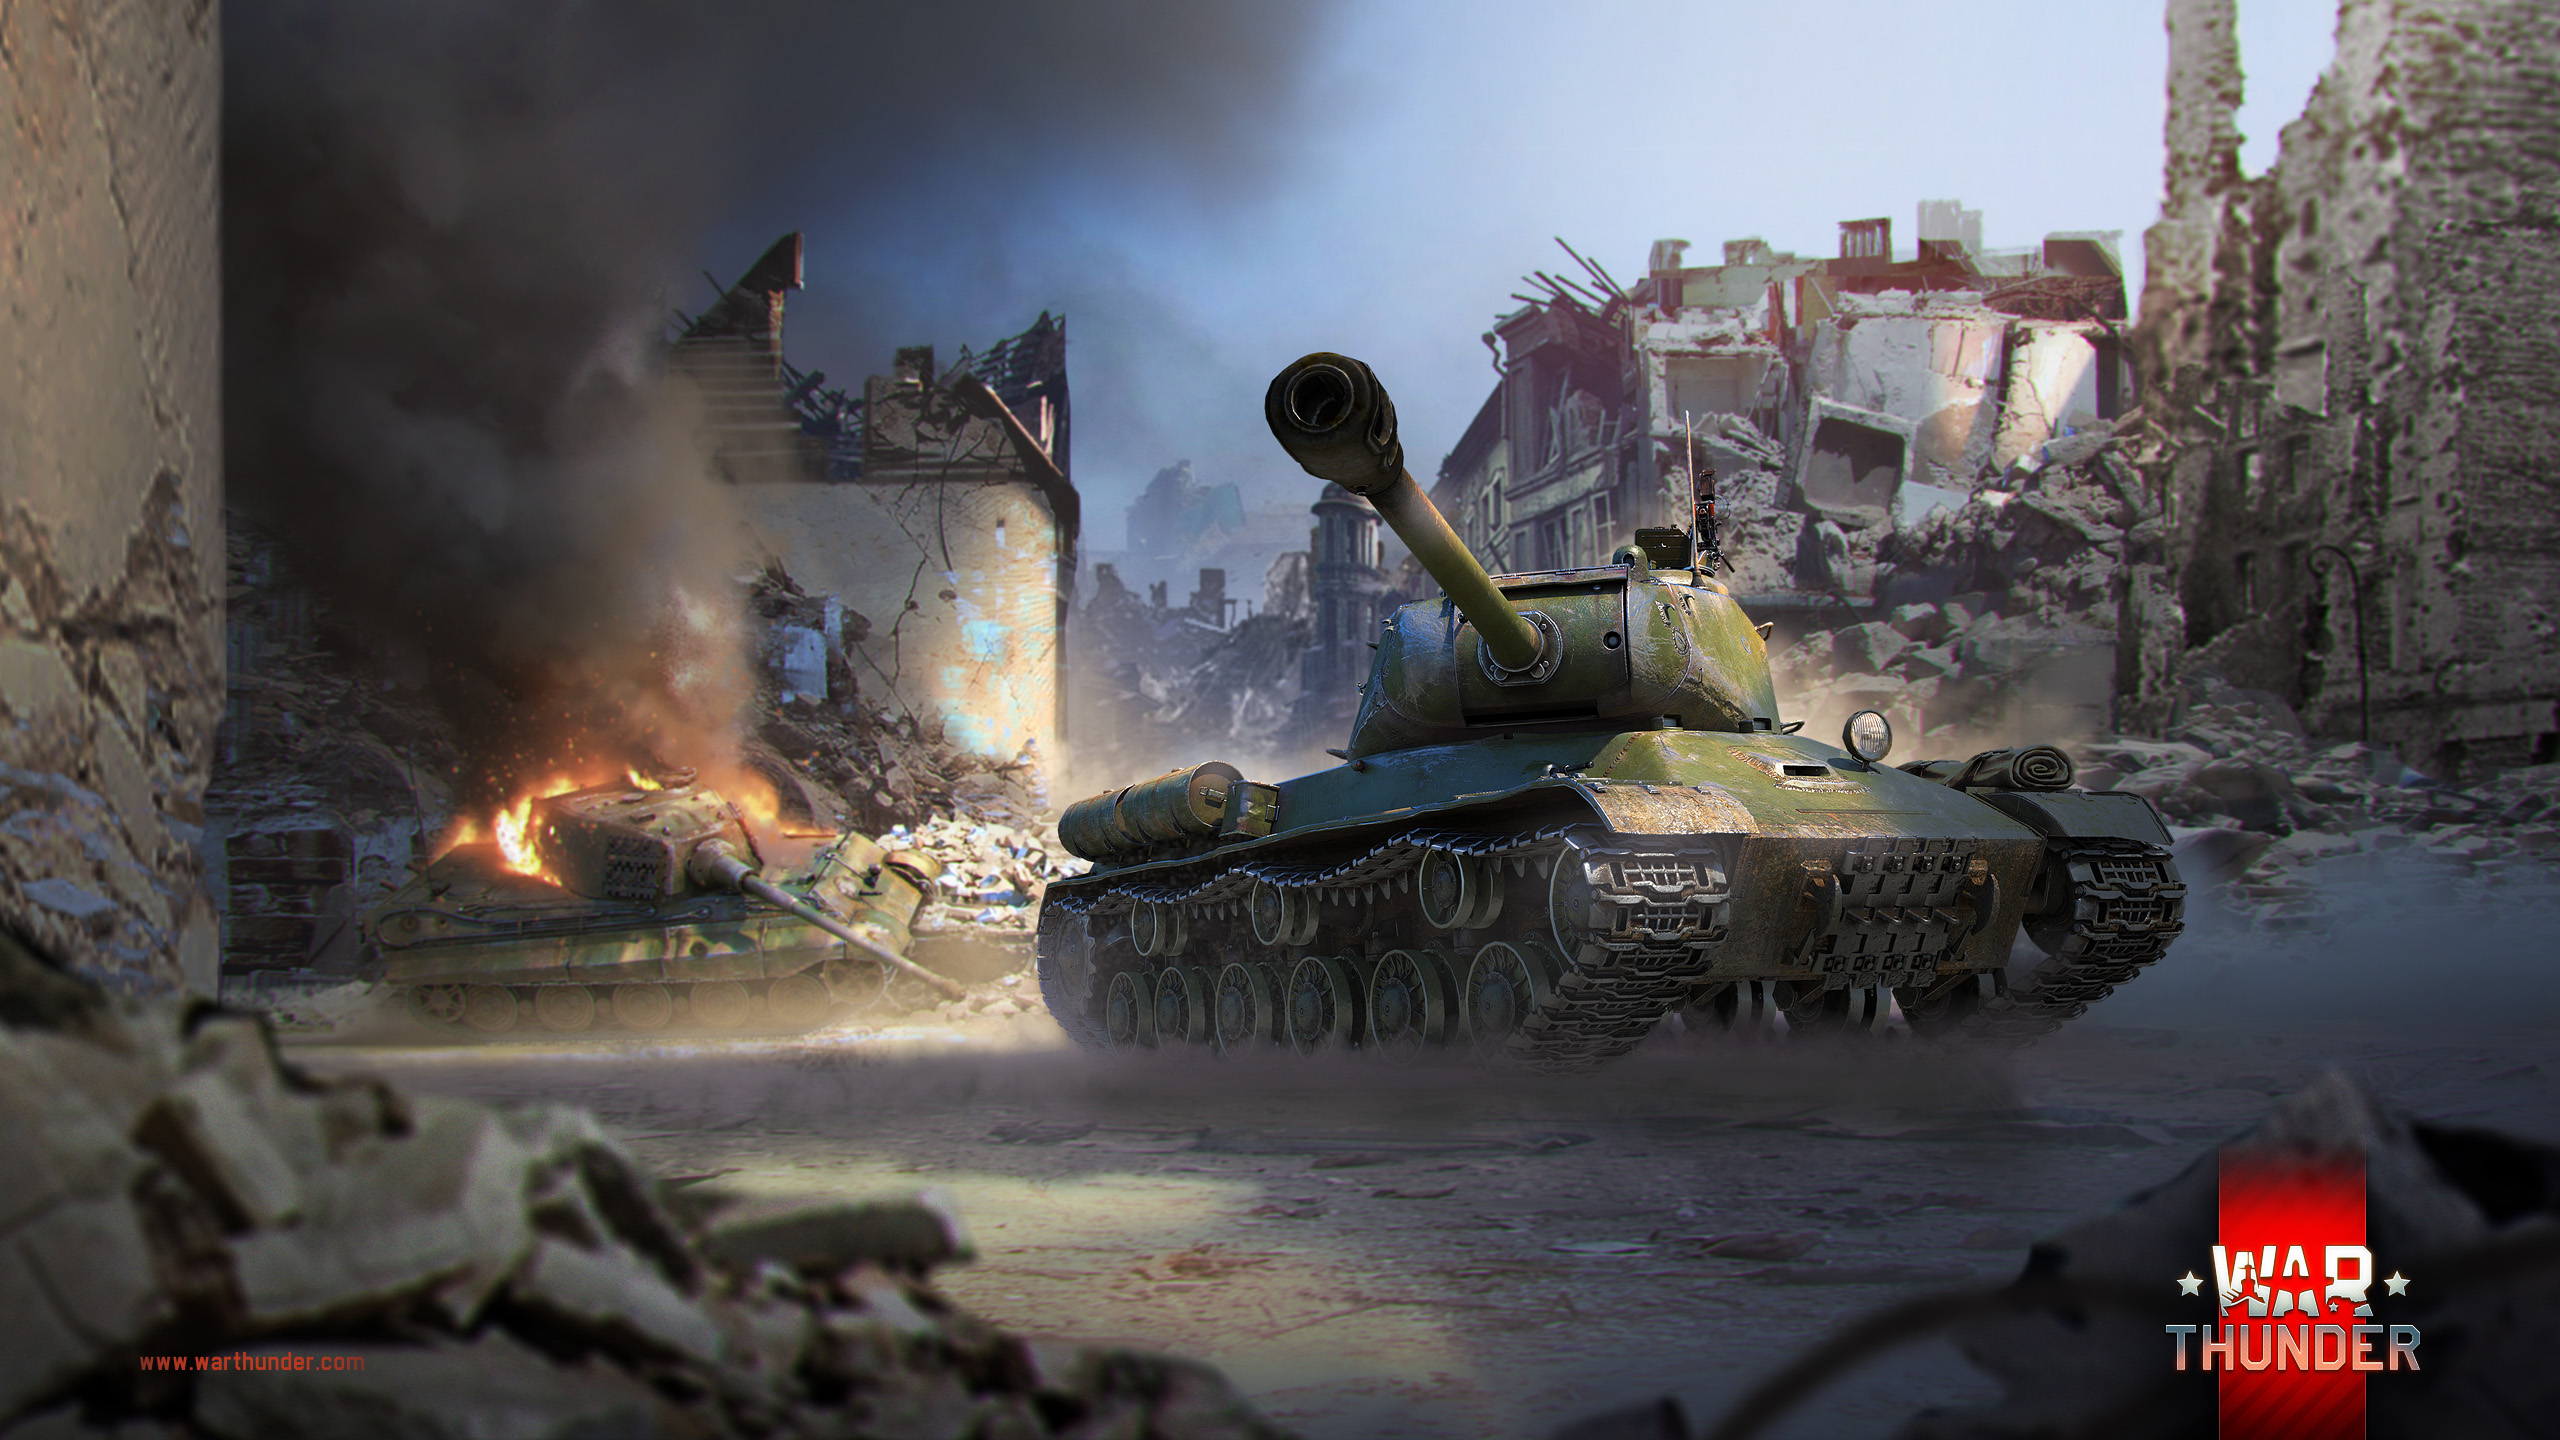  Special Tank Duels Tiger  II vs  IS 2  News War Thunder